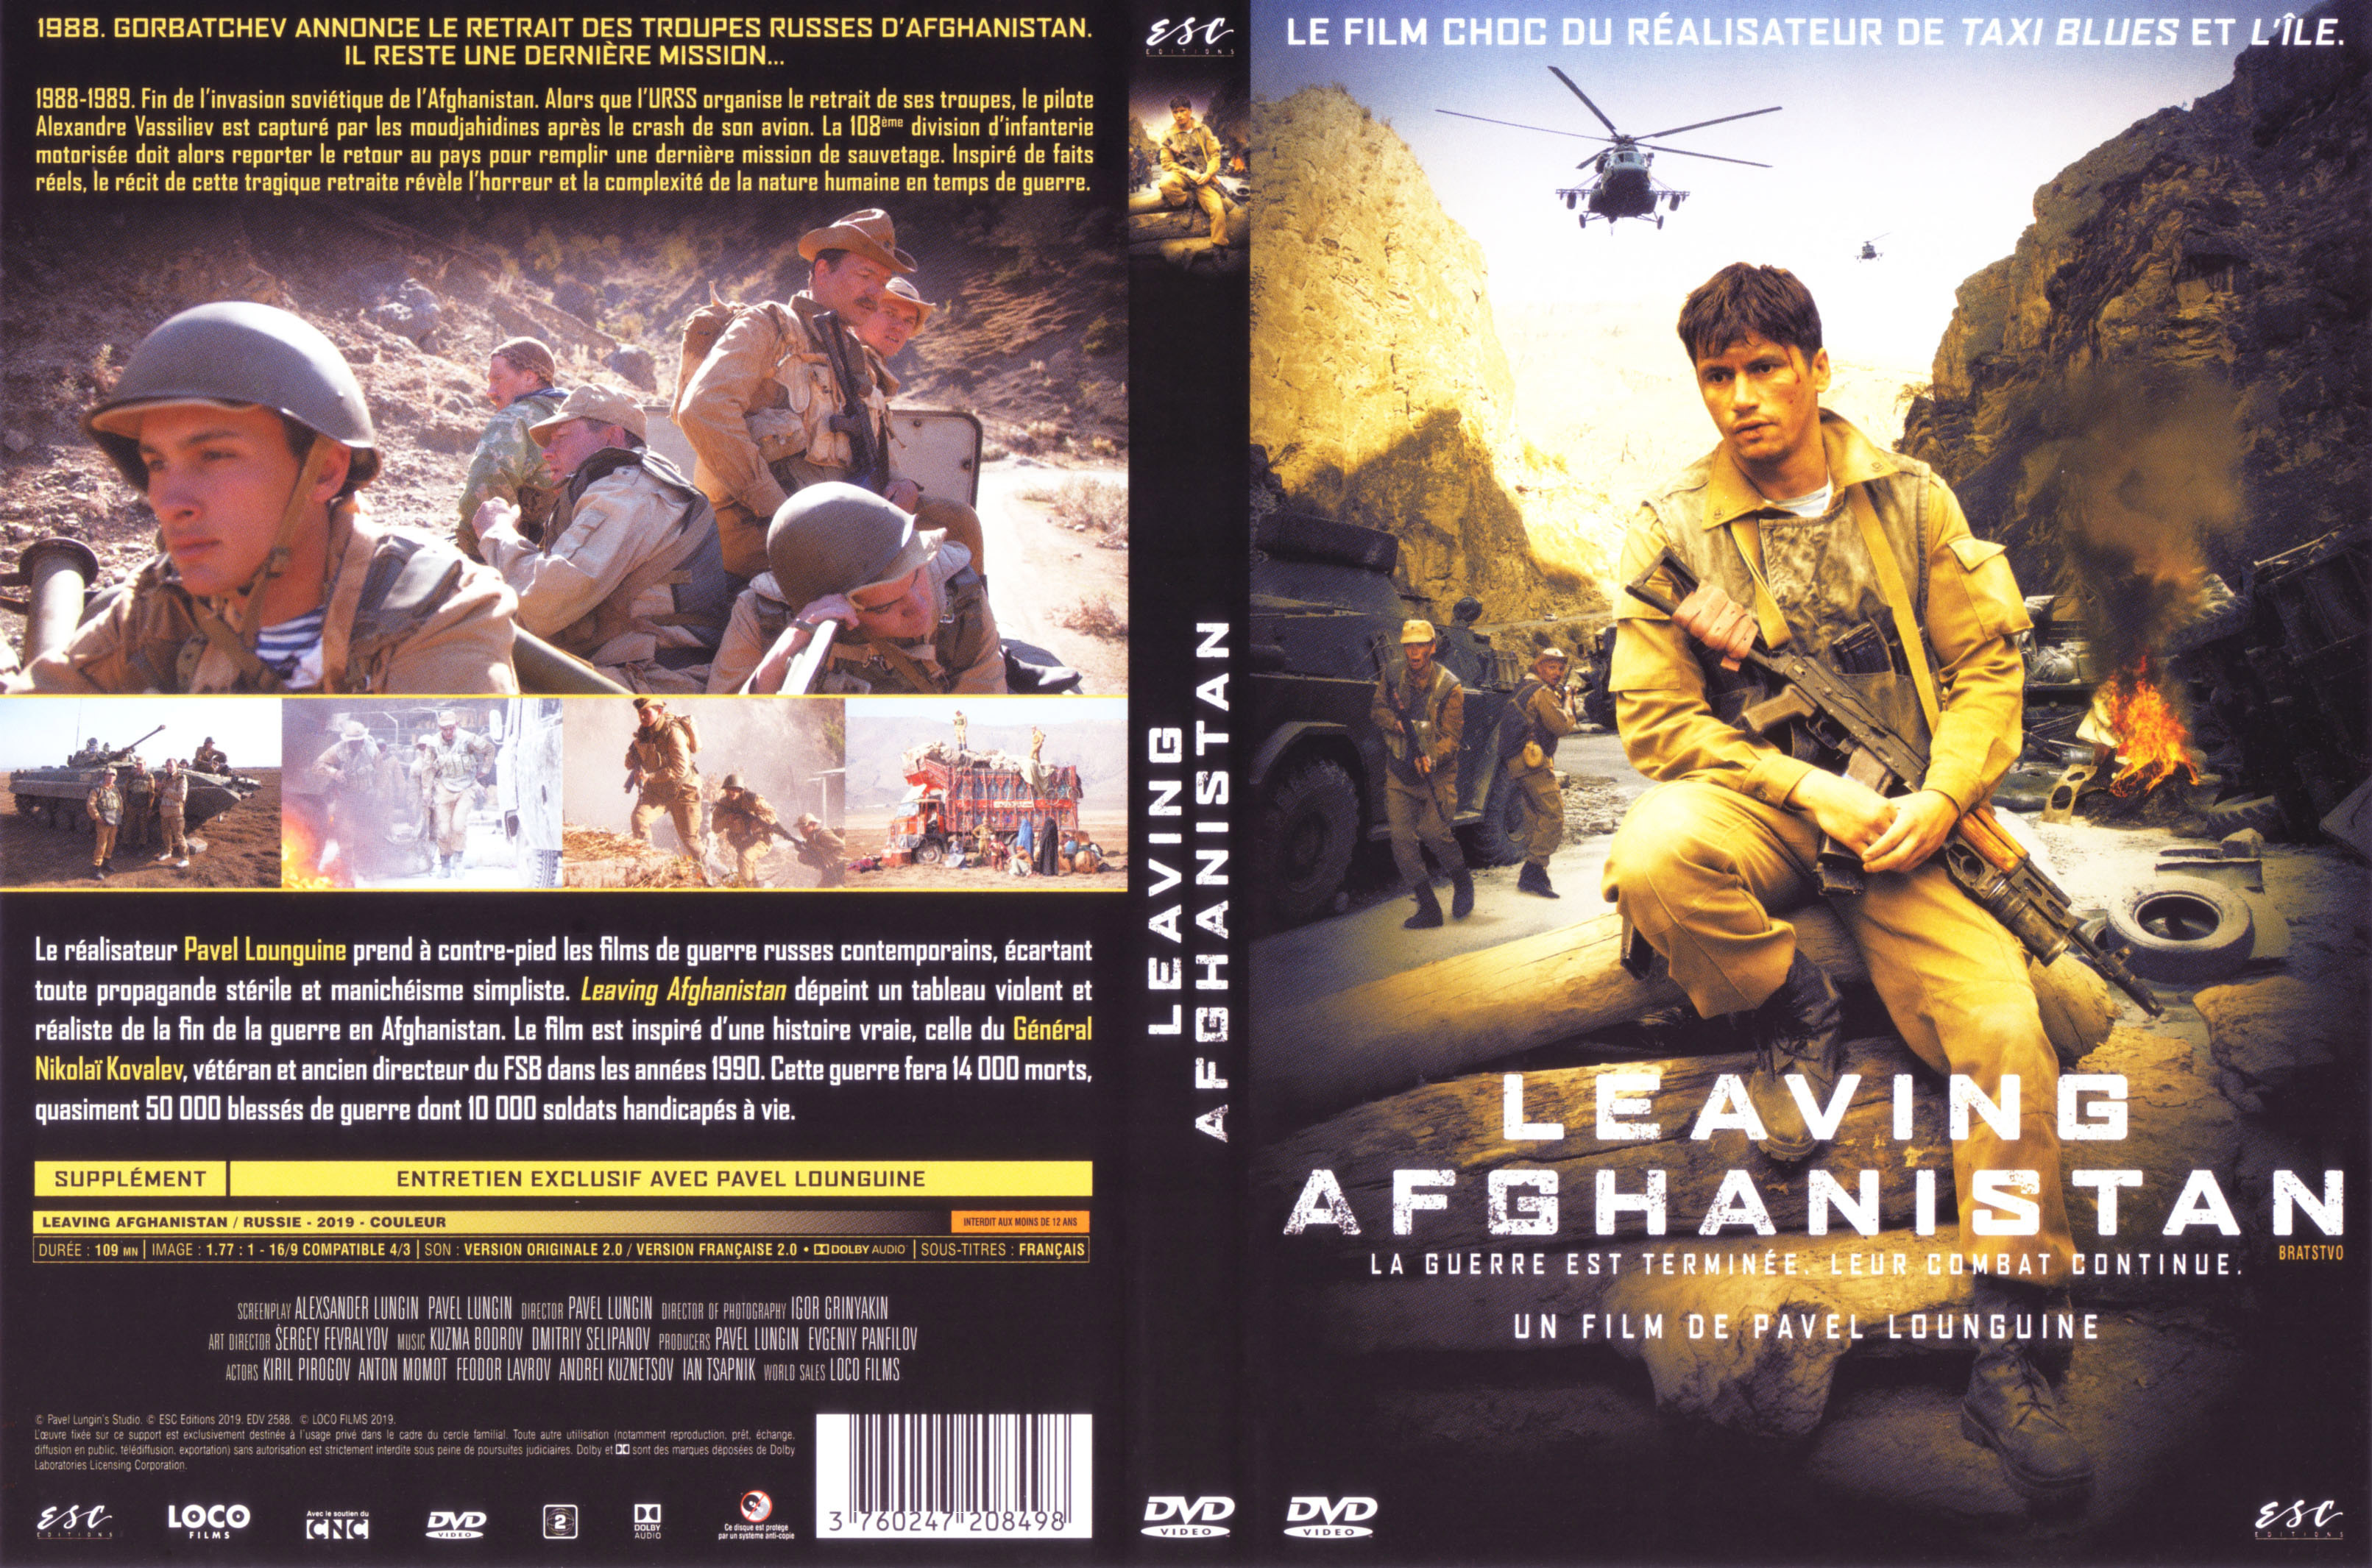 Jaquette DVD Leaving Afghanistan